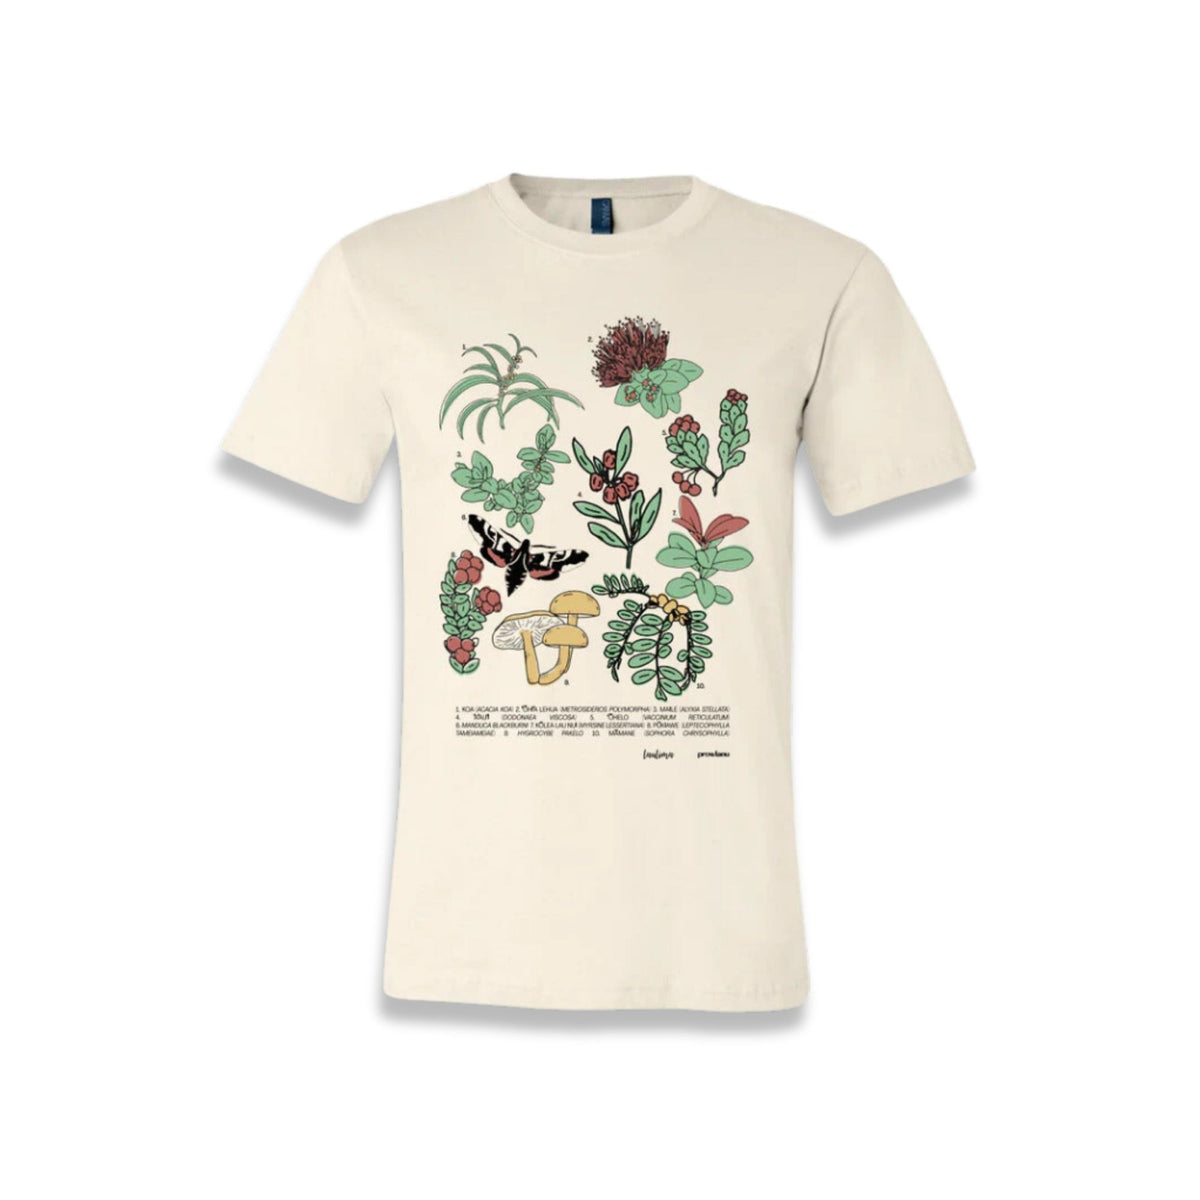 Pop-Up Mākeke - Laulima Hawai&#39;i - Mauka Unisex Short Sleeve T-Shirt - Front View